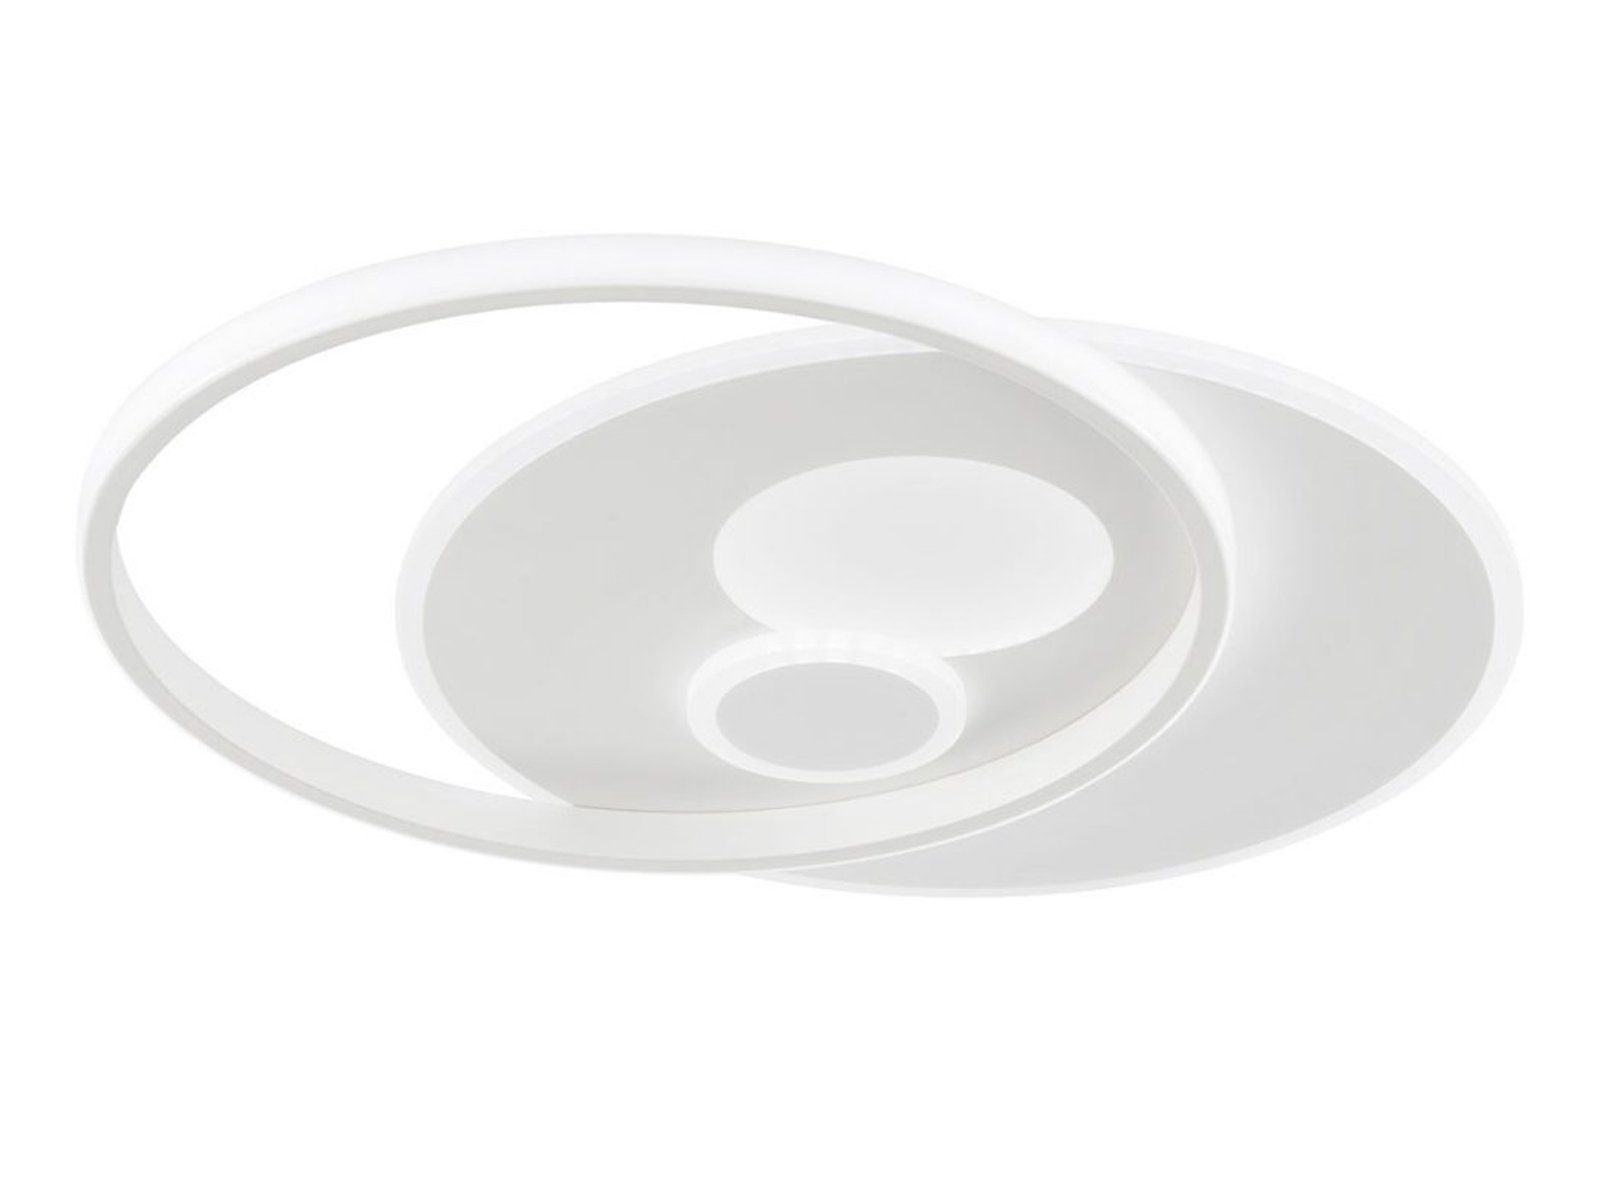 WOFI LED Deckenleuchte, Dimmer, Weiß, flach, Kaltweiß, Warmweiß LED Kücheninsel - fest dimmbar, 52cm integriert, Lampe Deckenbeleuchtung Breite